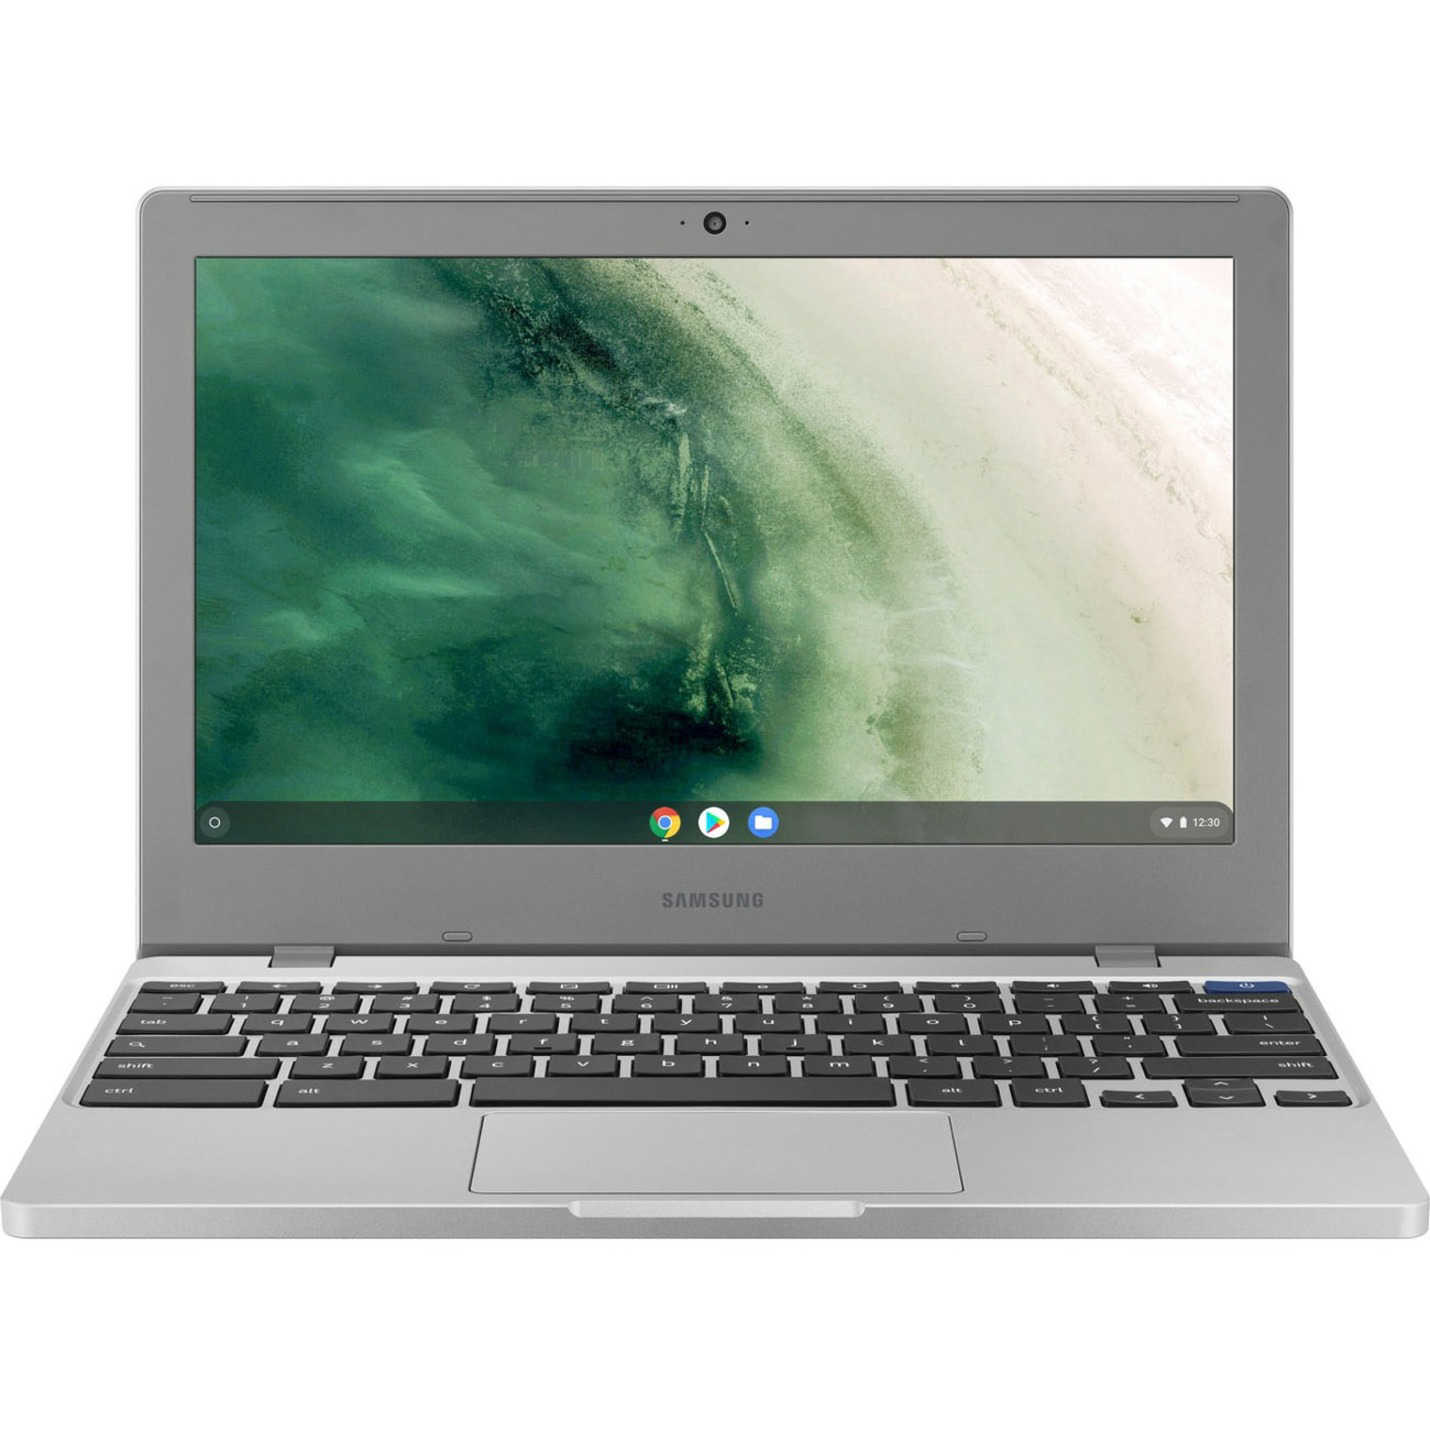 Samsung Chromebook 4 11.6", Intel Celeron N4020, 4GB RAM, 32GB SSD, Chrome OS, Platinum Titan, XE310XBA $119